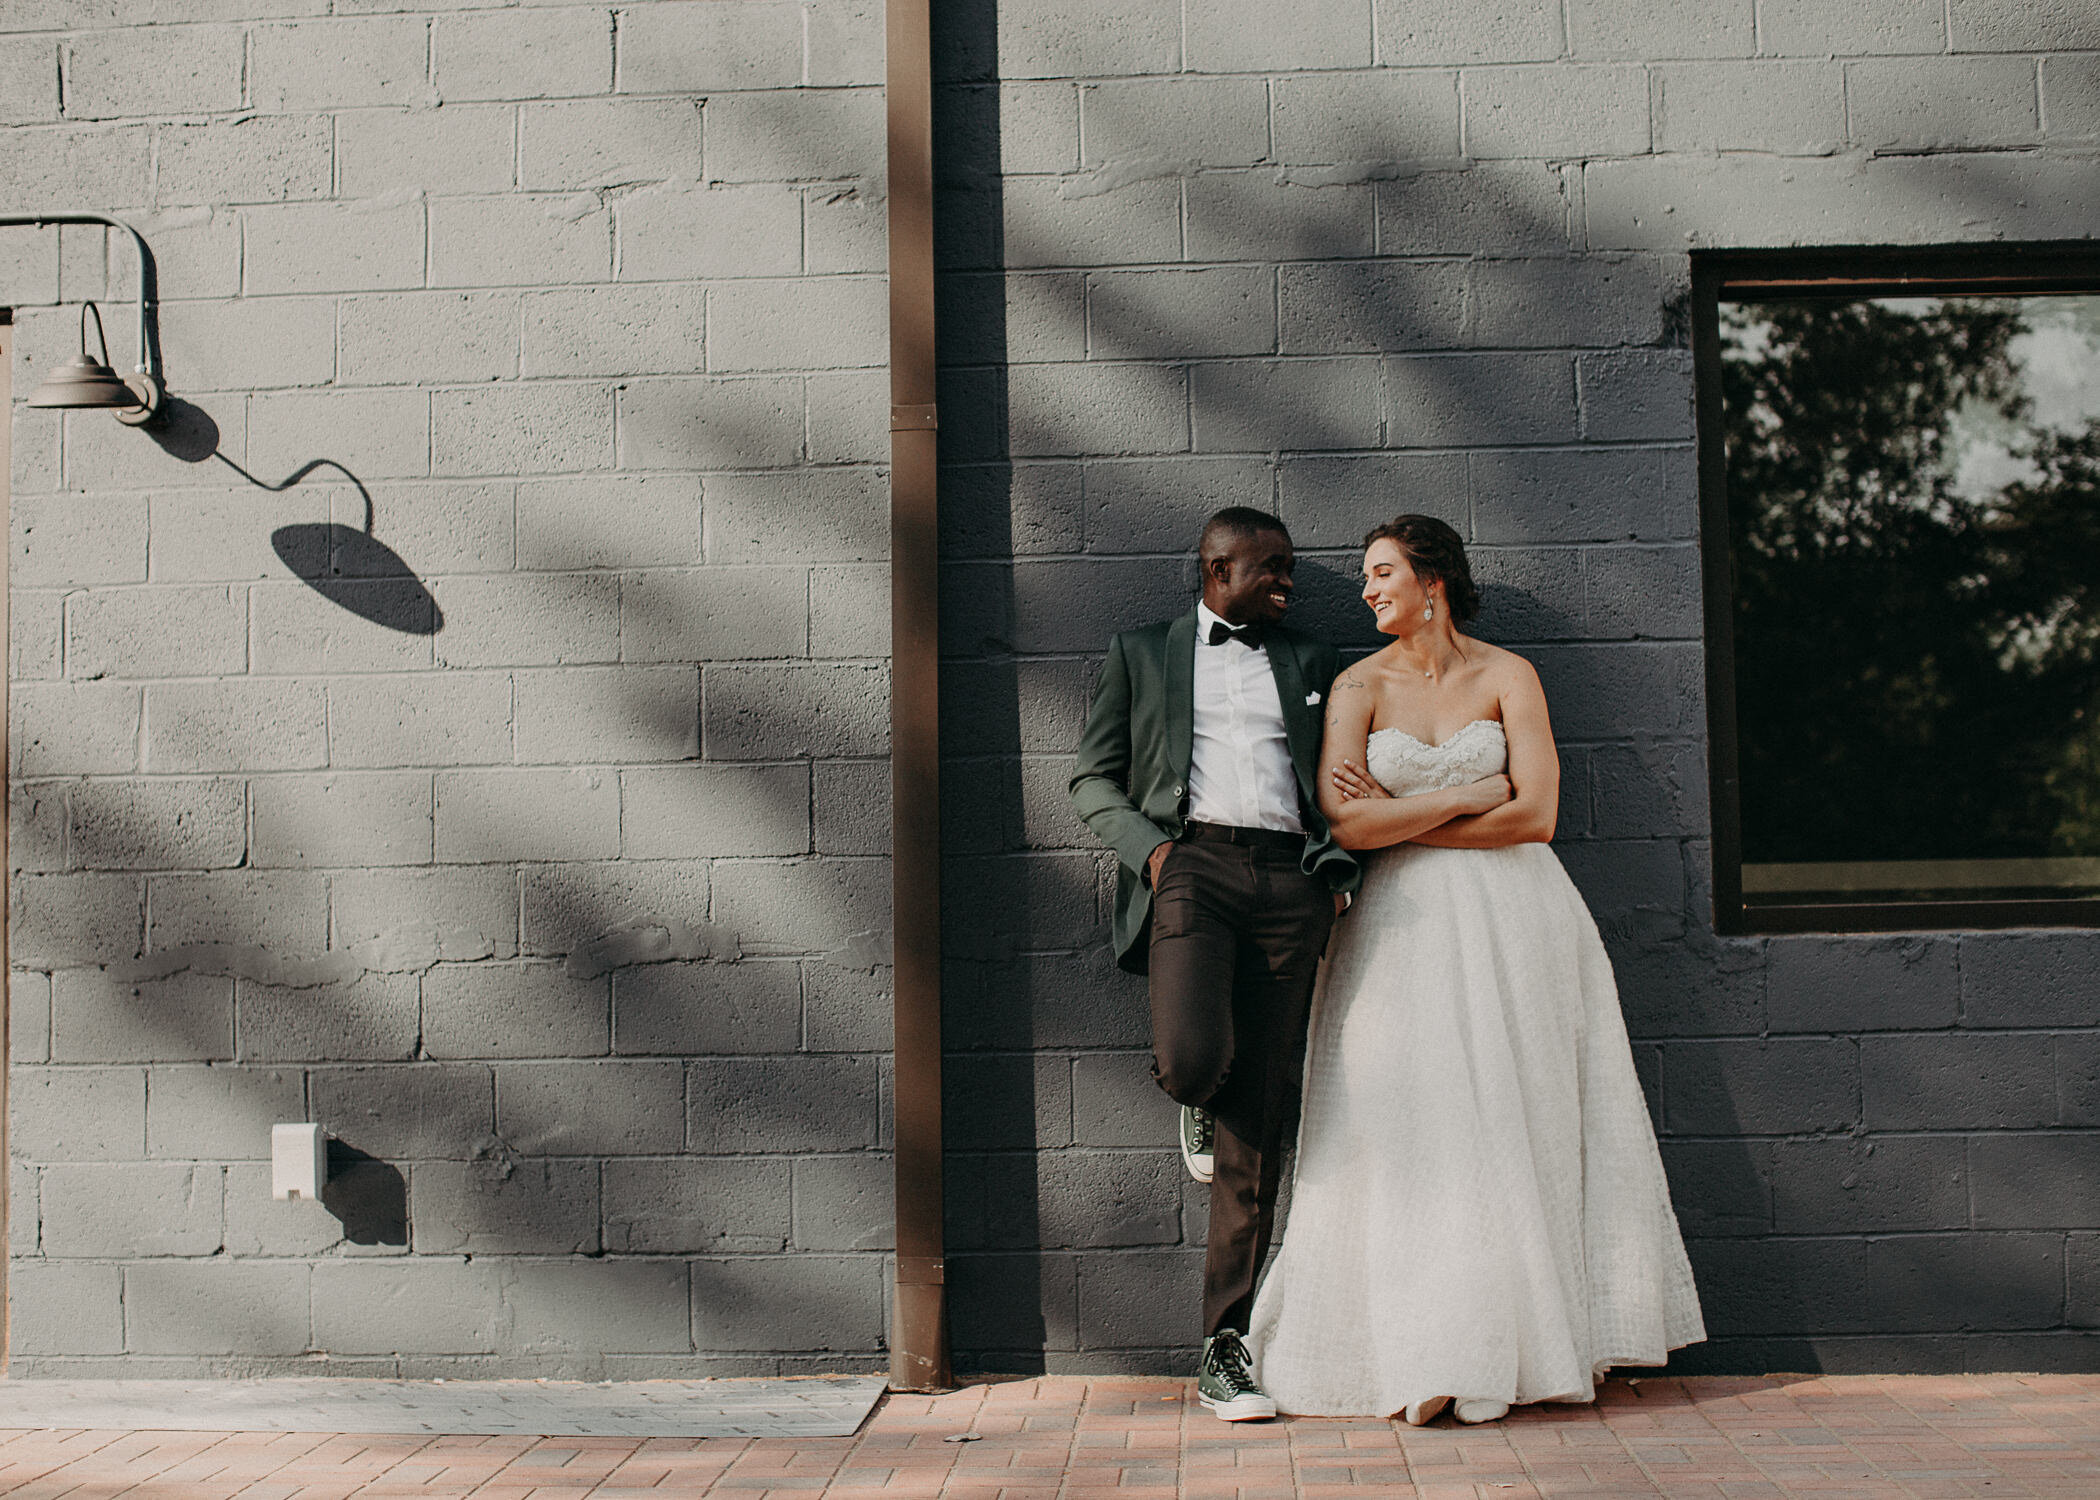 Monday Night Garage Wedding - Atlanta,Ga - Aline Marin Photography50.jpg